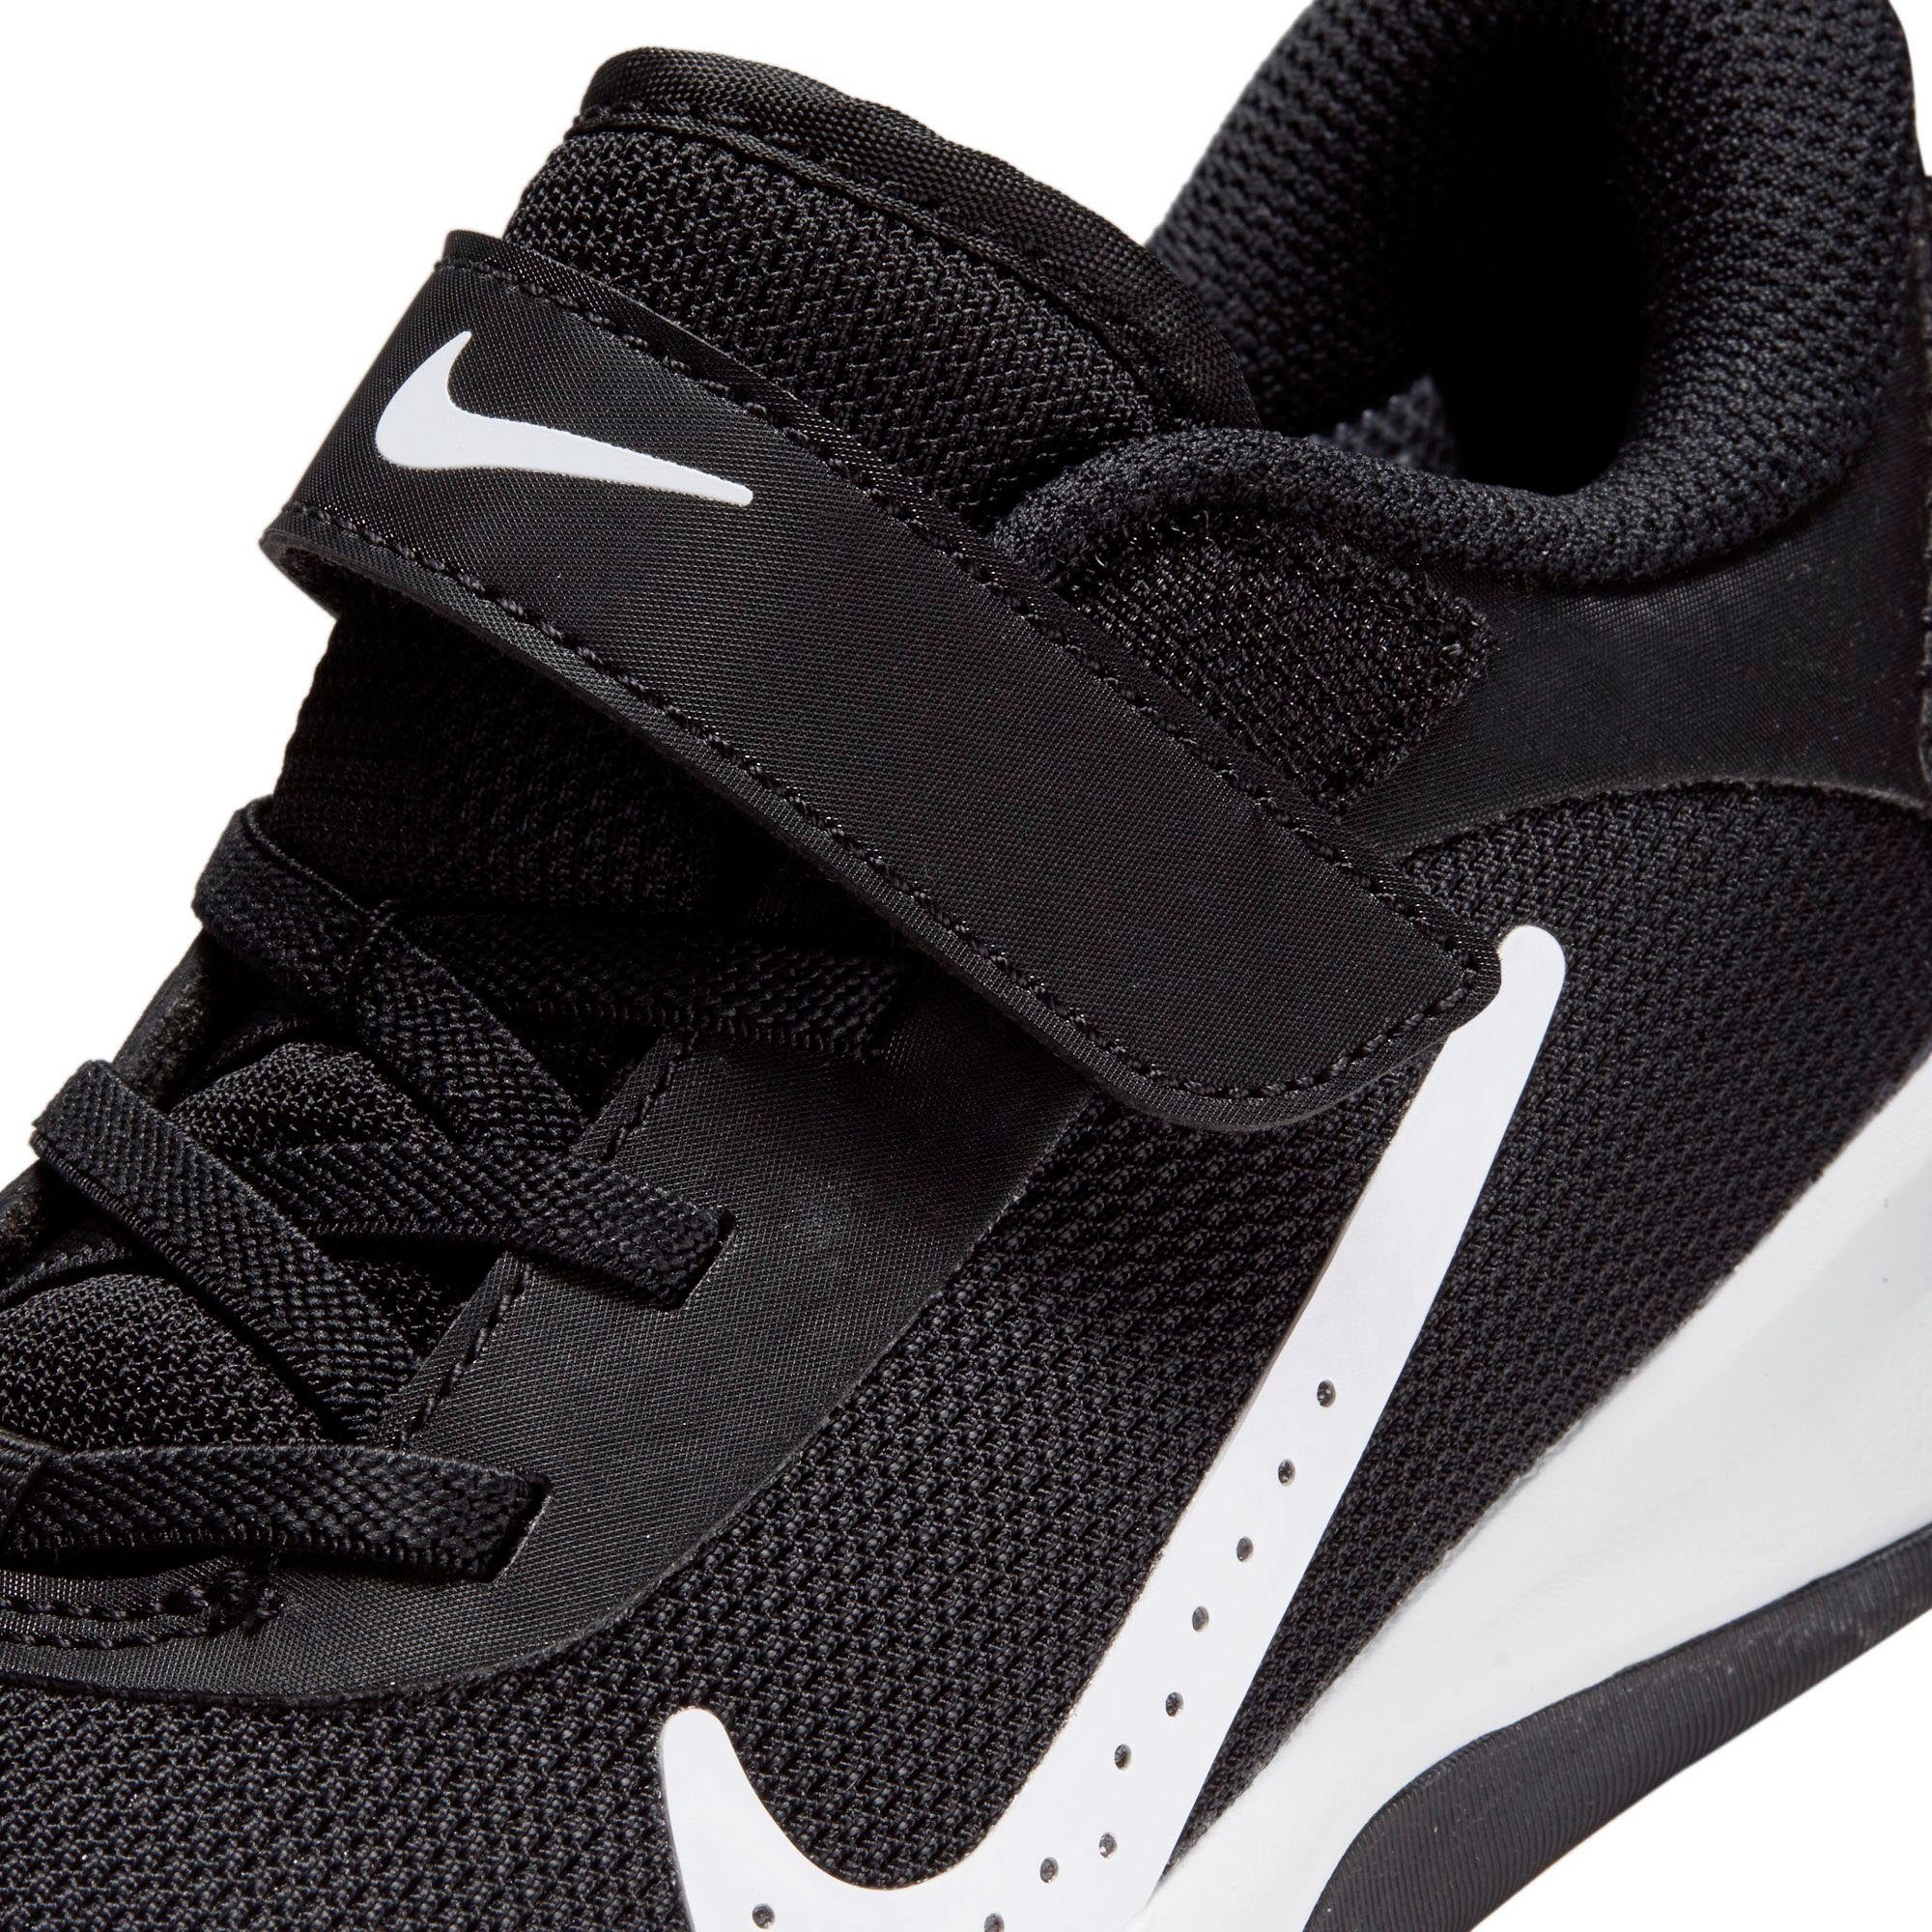 black-white (PS) Multi-Court Nike Hallenschuh Omni